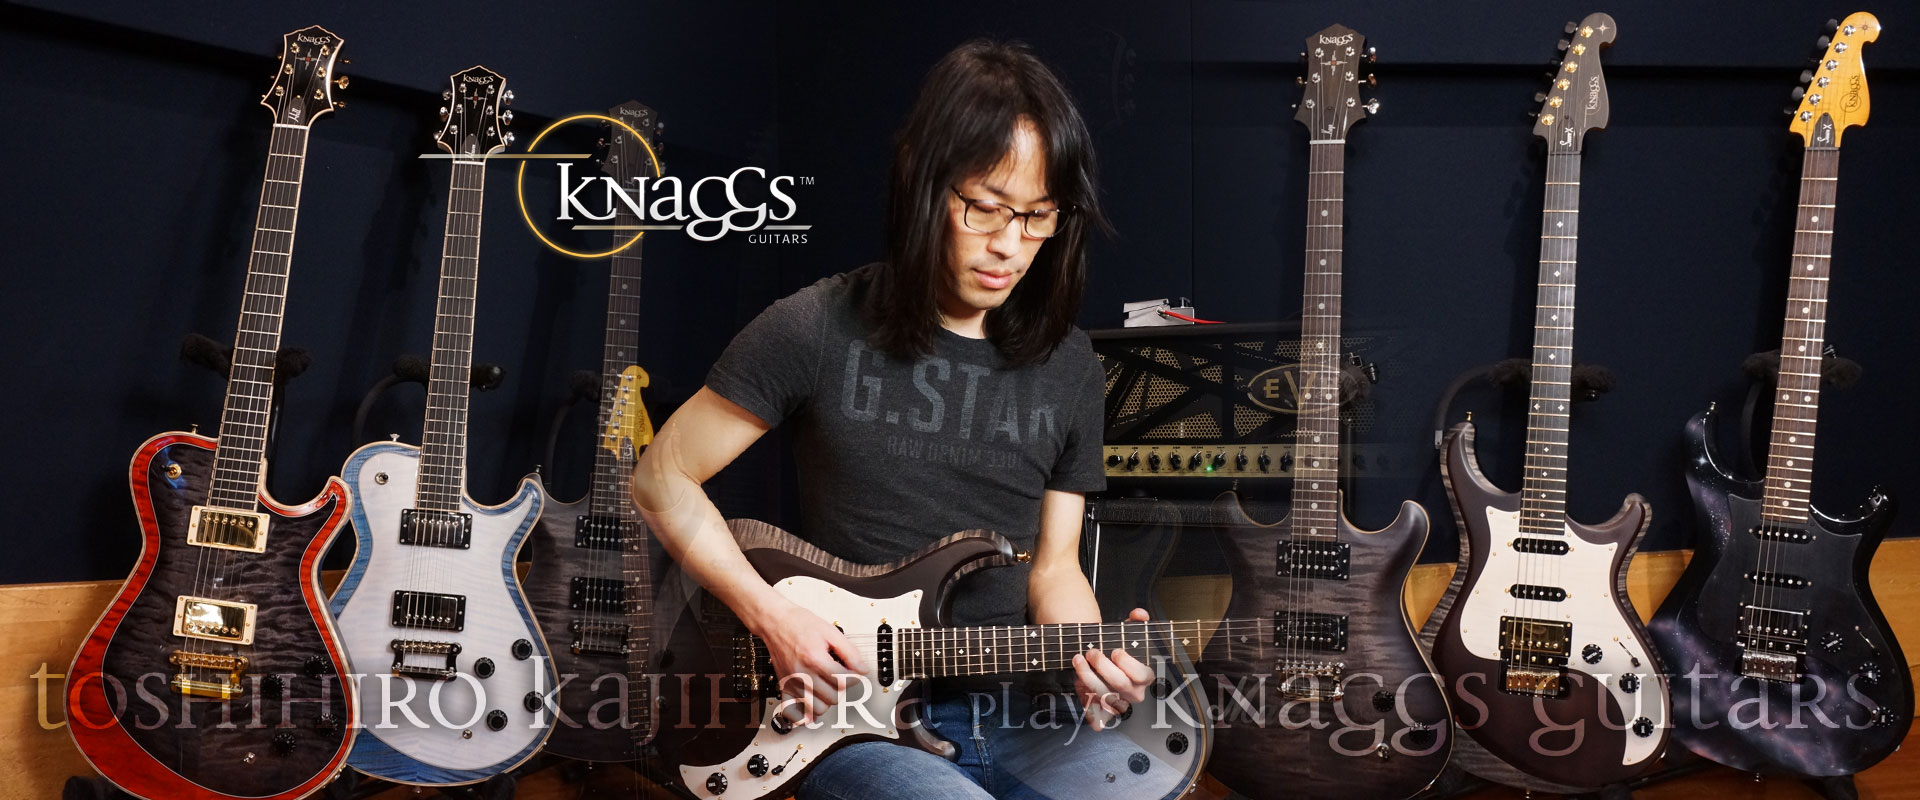 Toshihiro Kajiwara plays Knaggs Guitars